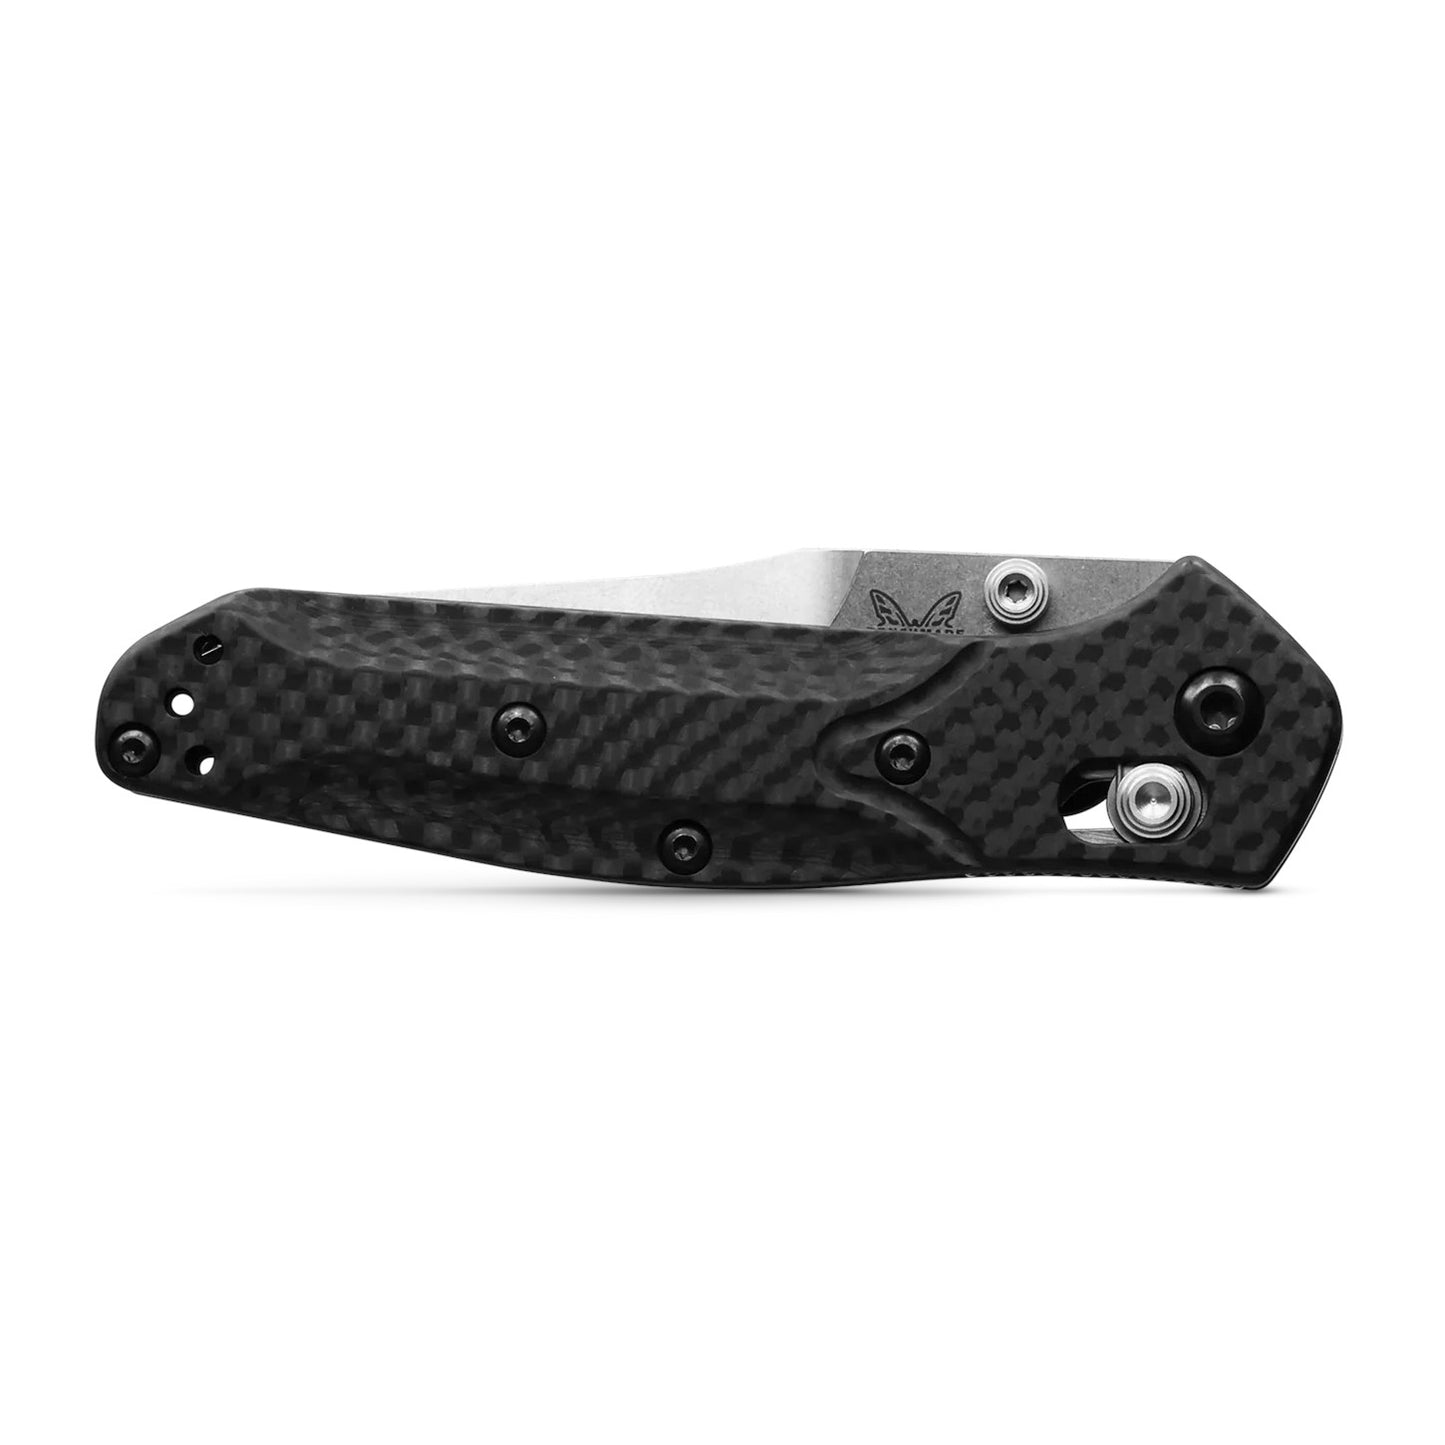 Benchmade 945-2 Mini Osborne 2.92" CPM-S90V Folding Knife with Carbon Fiber Handle